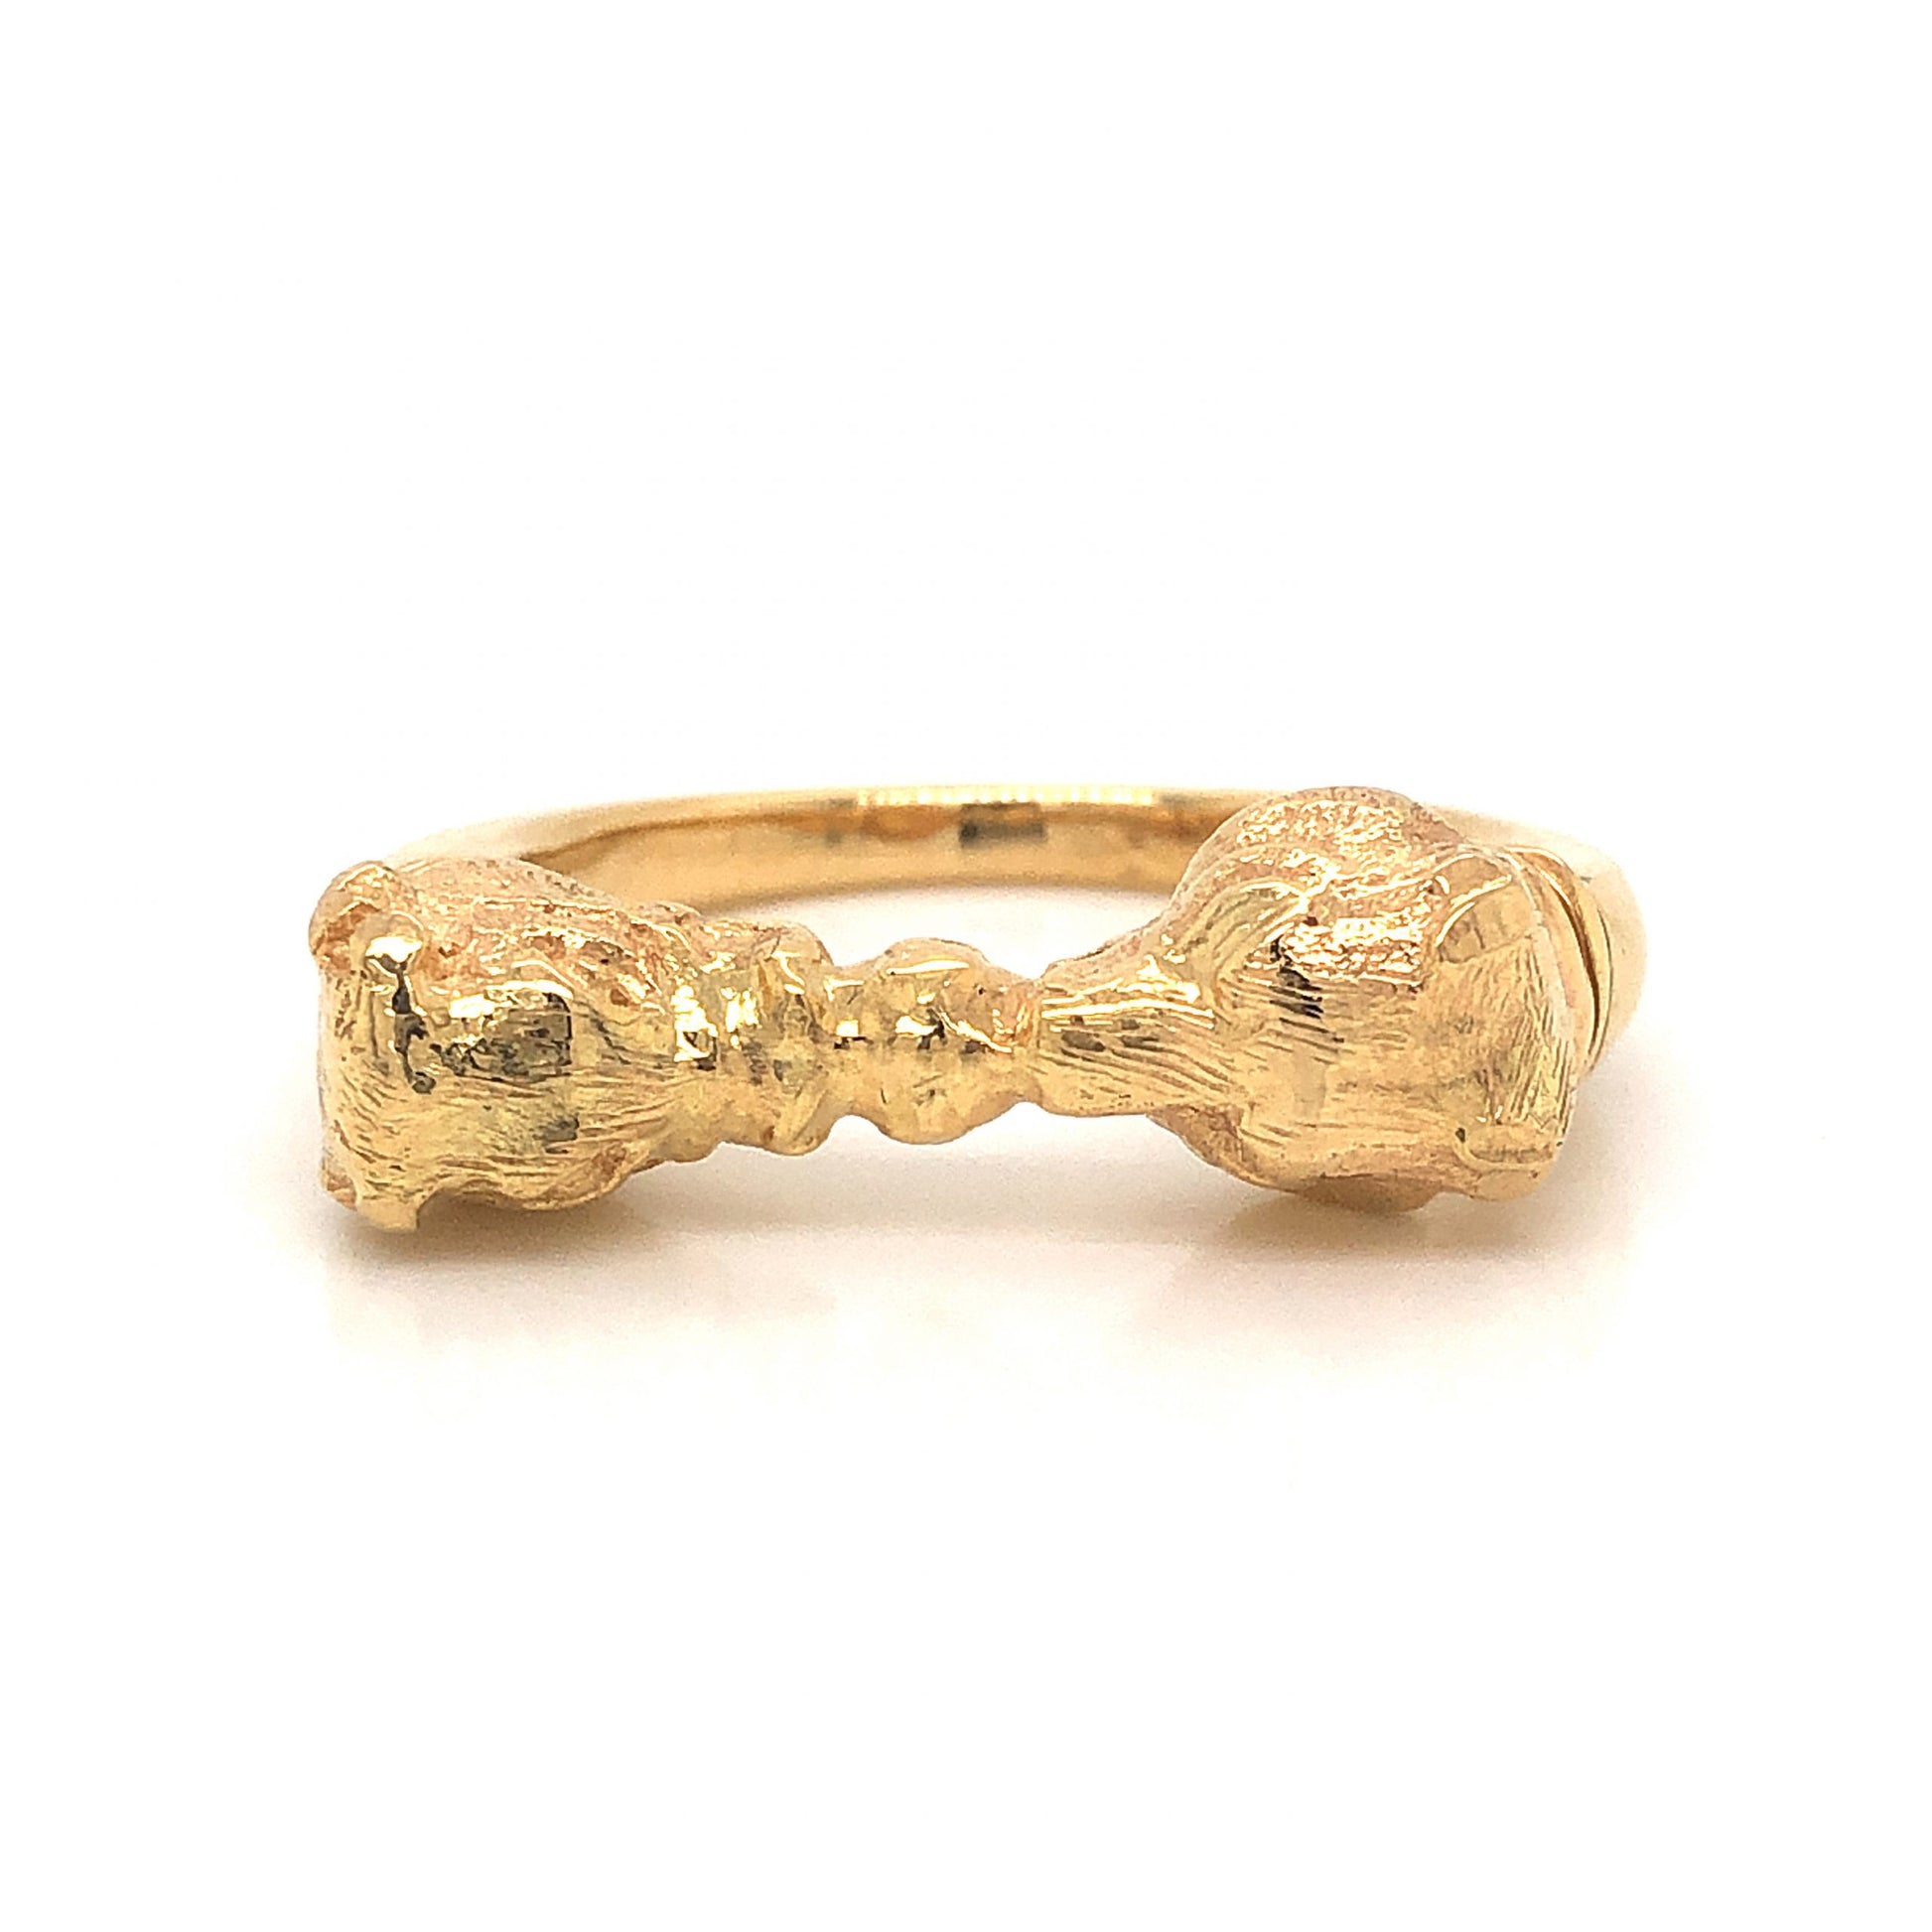 Bull & Bear Stock Market Ring in 18k Yellow GoldComposition: 18 Karat Yellow Gold Ring Size: 8.75 Total Gram Weight: 8.9 g